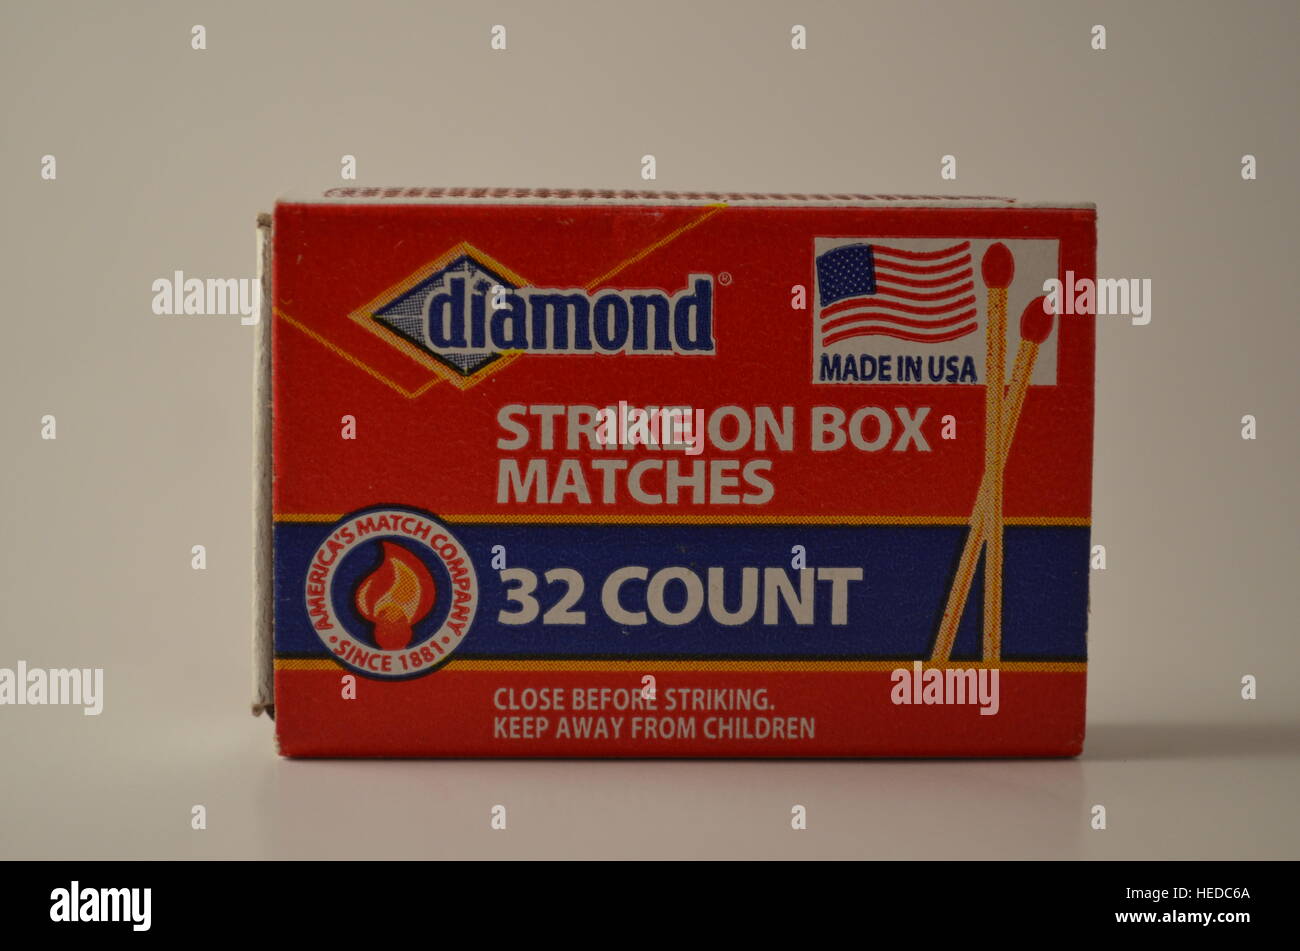 Diamond brand box of matches. Stock Photo